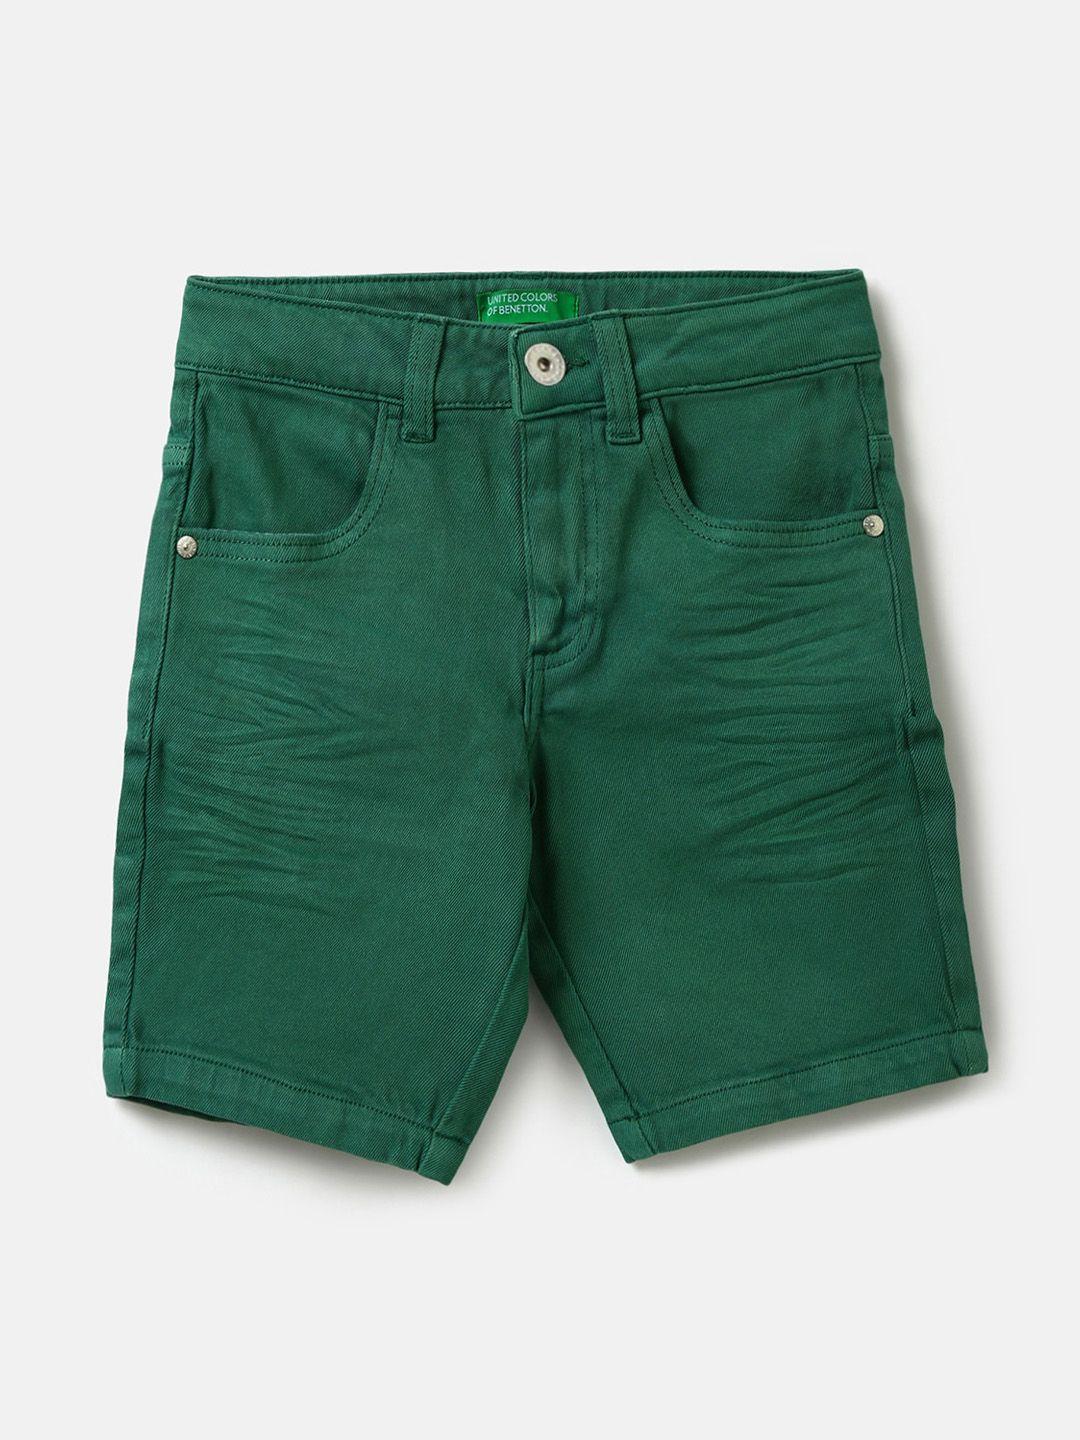 united-colors-of-benetton-boys-regular-fit-cotton-denim-shorts